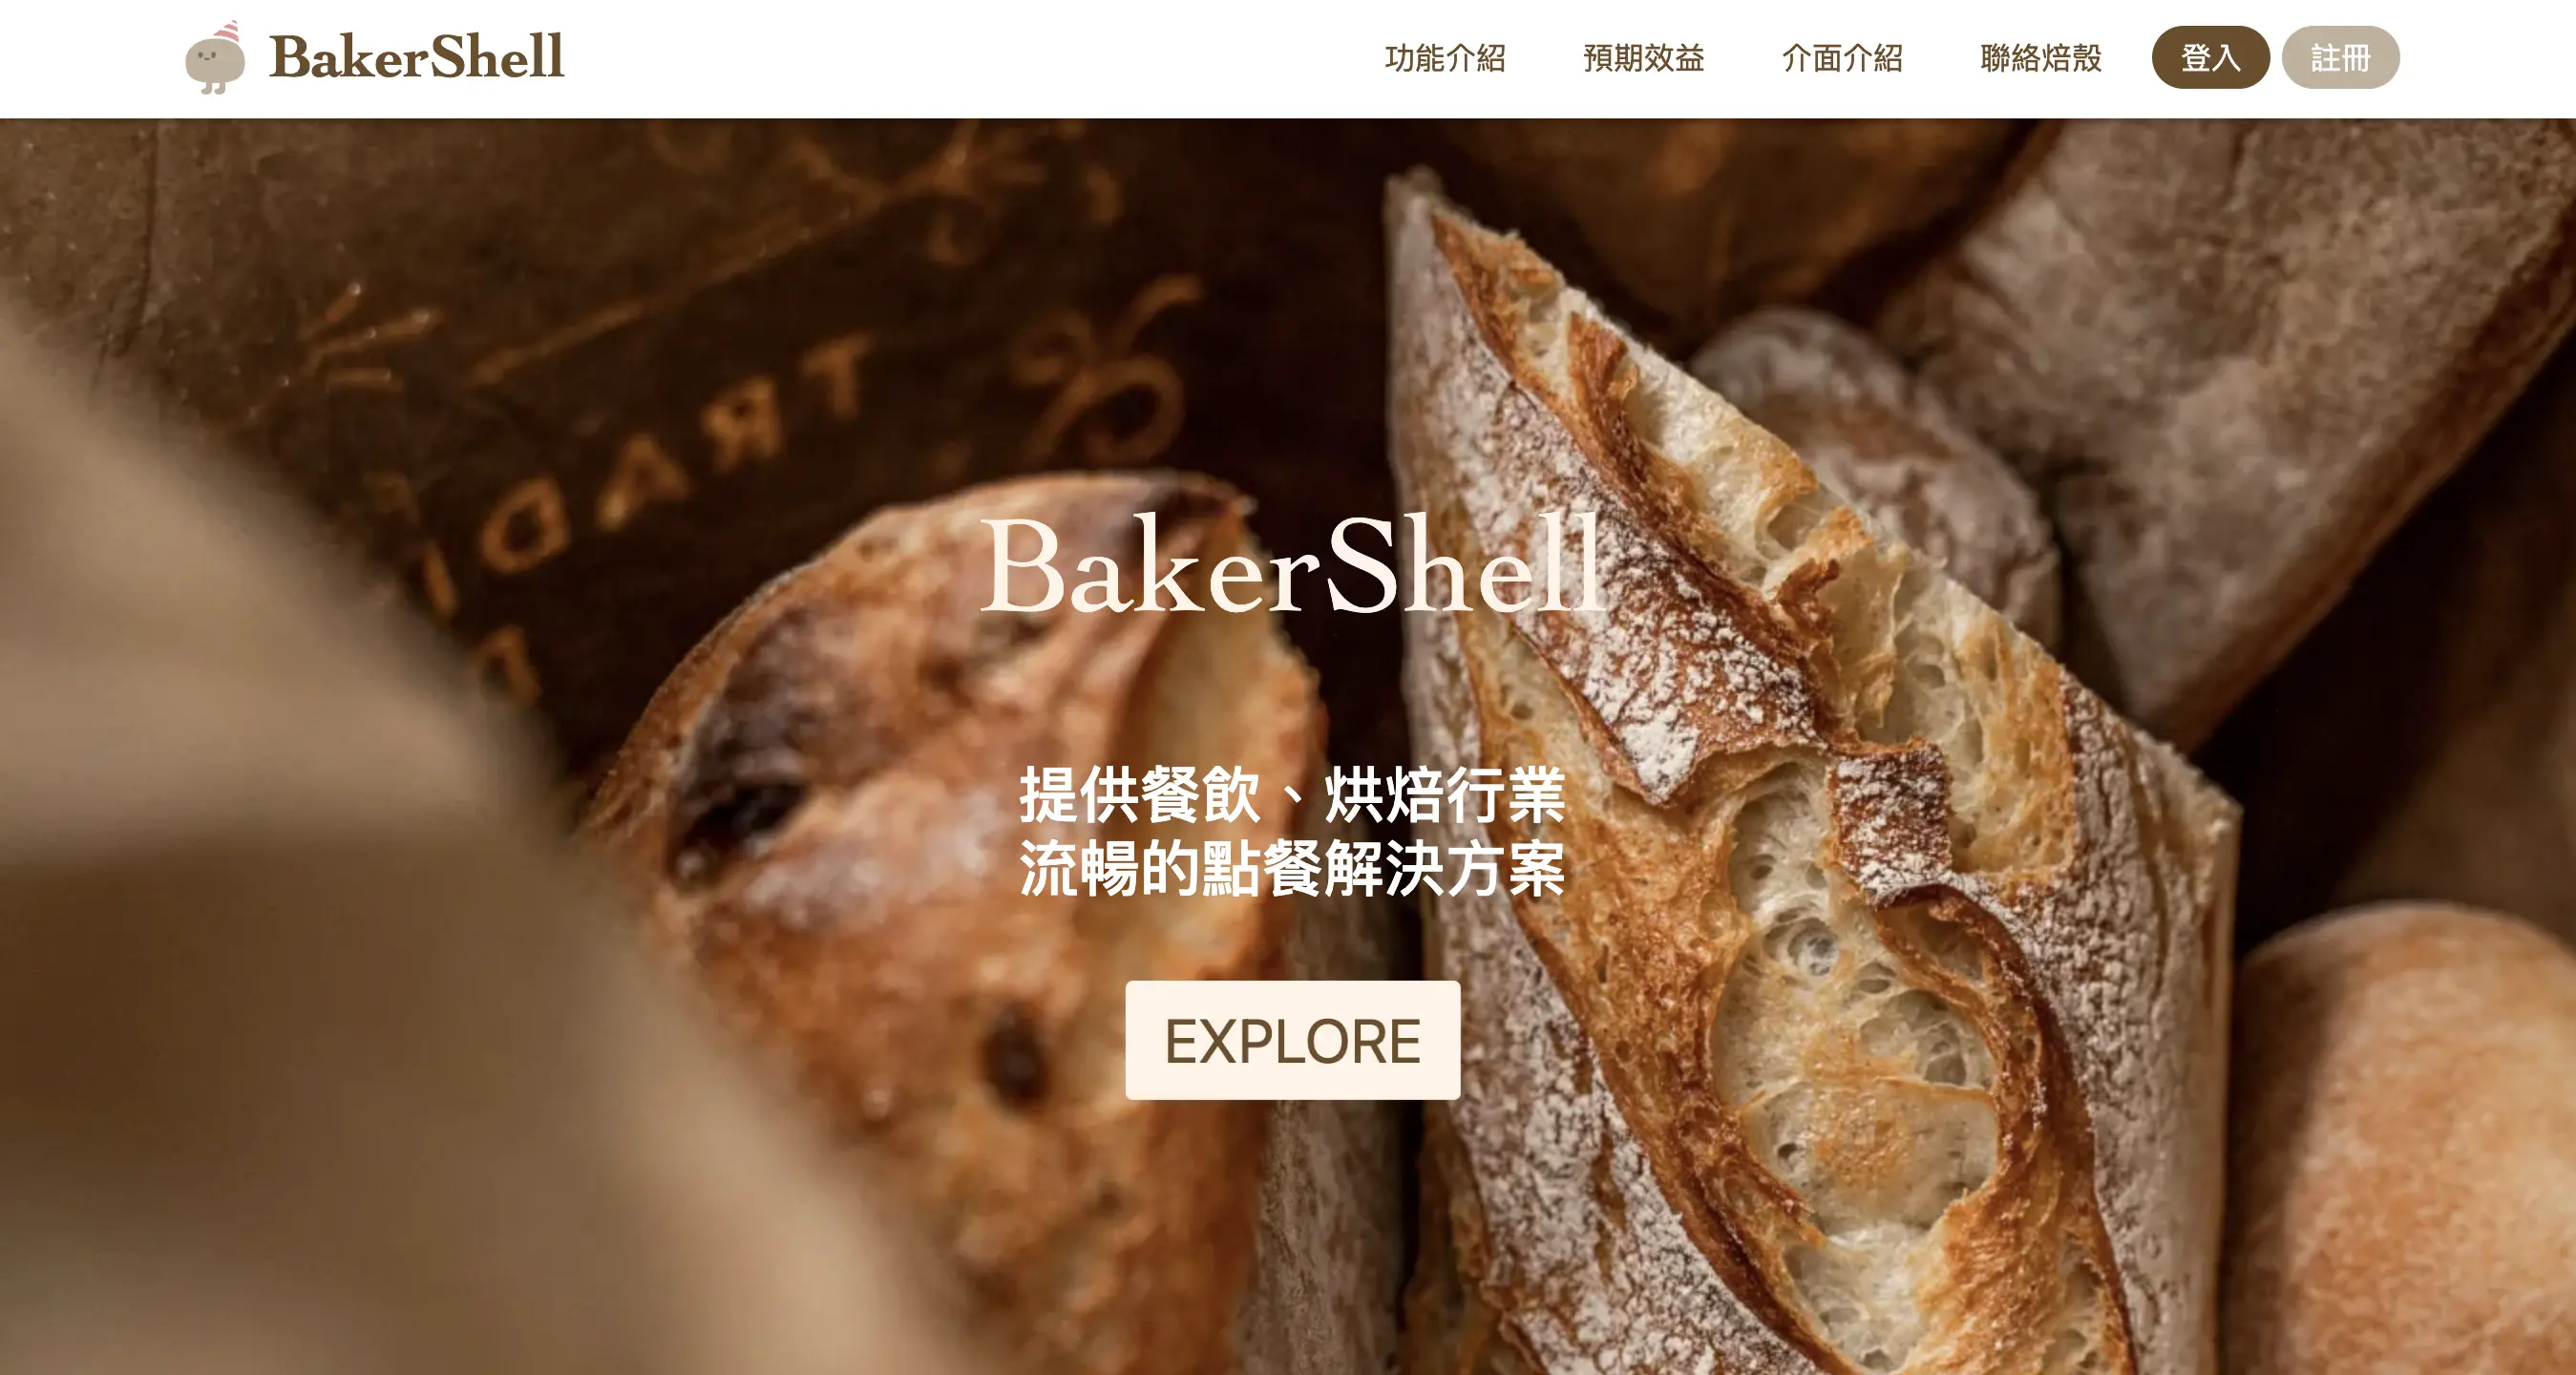 BakerShell 烘焙 line 電商